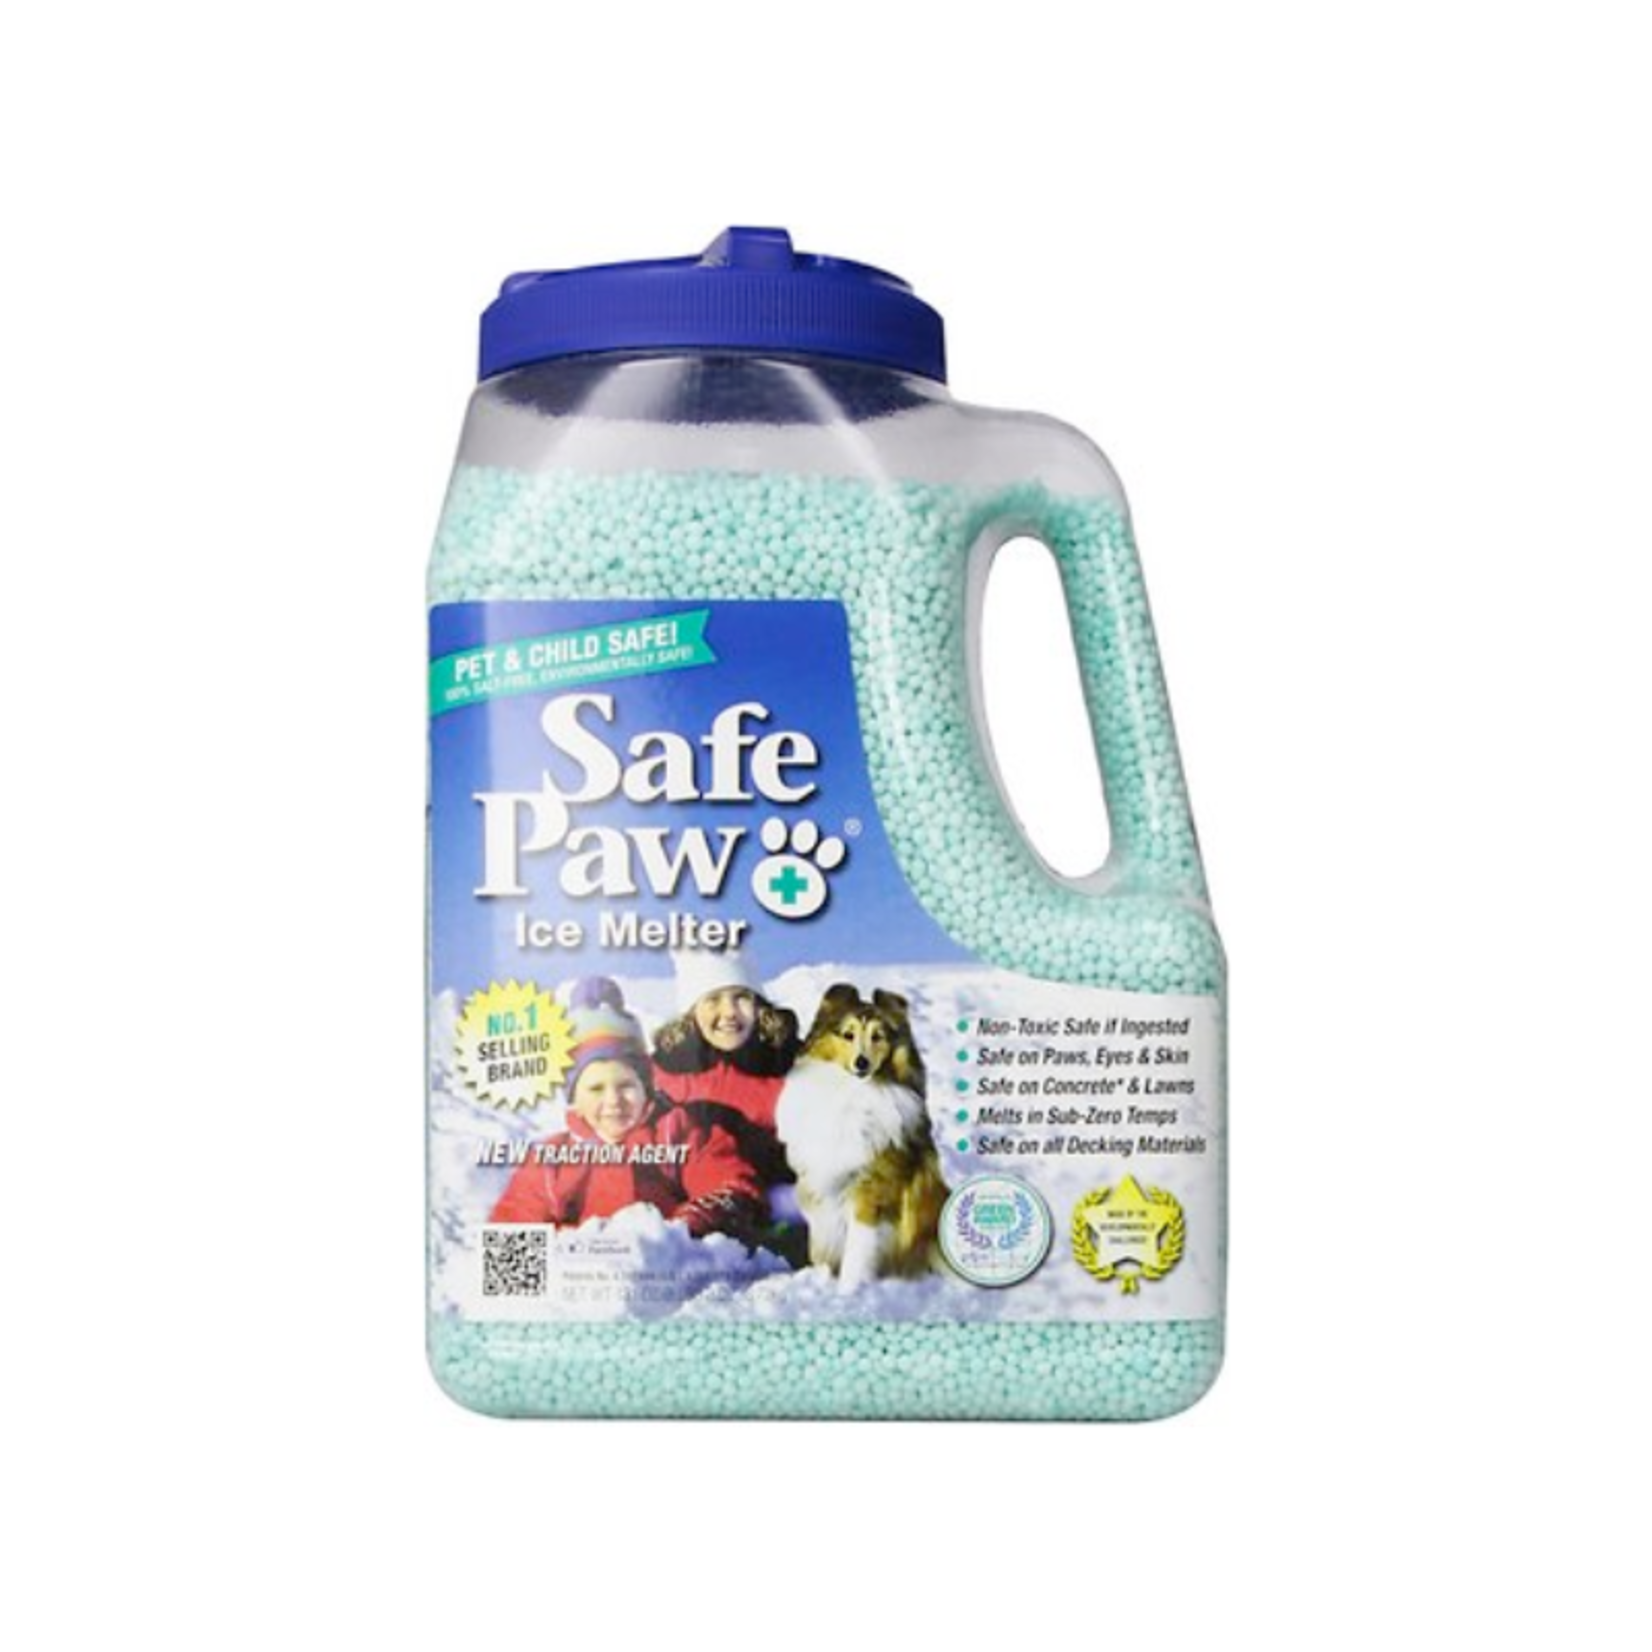 8.19# - Safe Paw - Pet & Child Safe Ice Melter